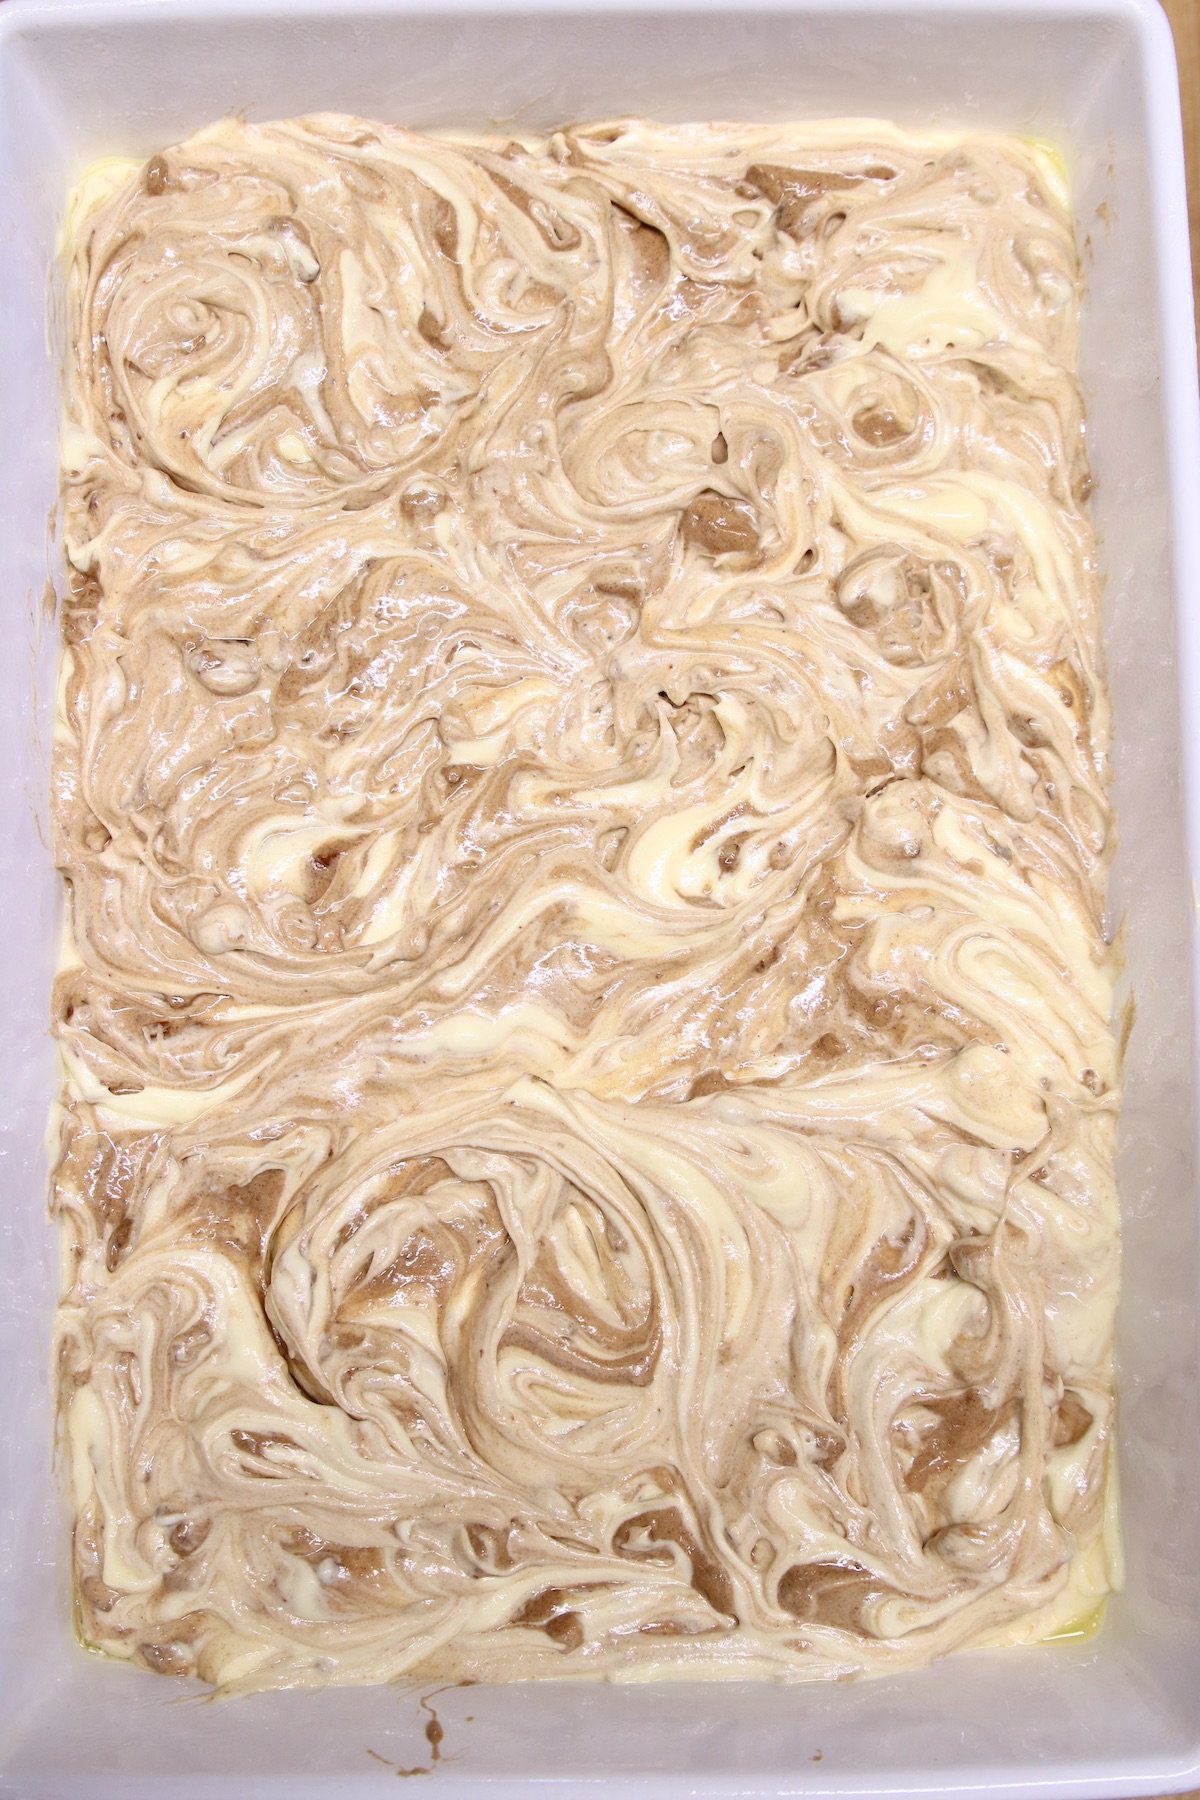 marble swirled cinnamon coffee cake -not baked